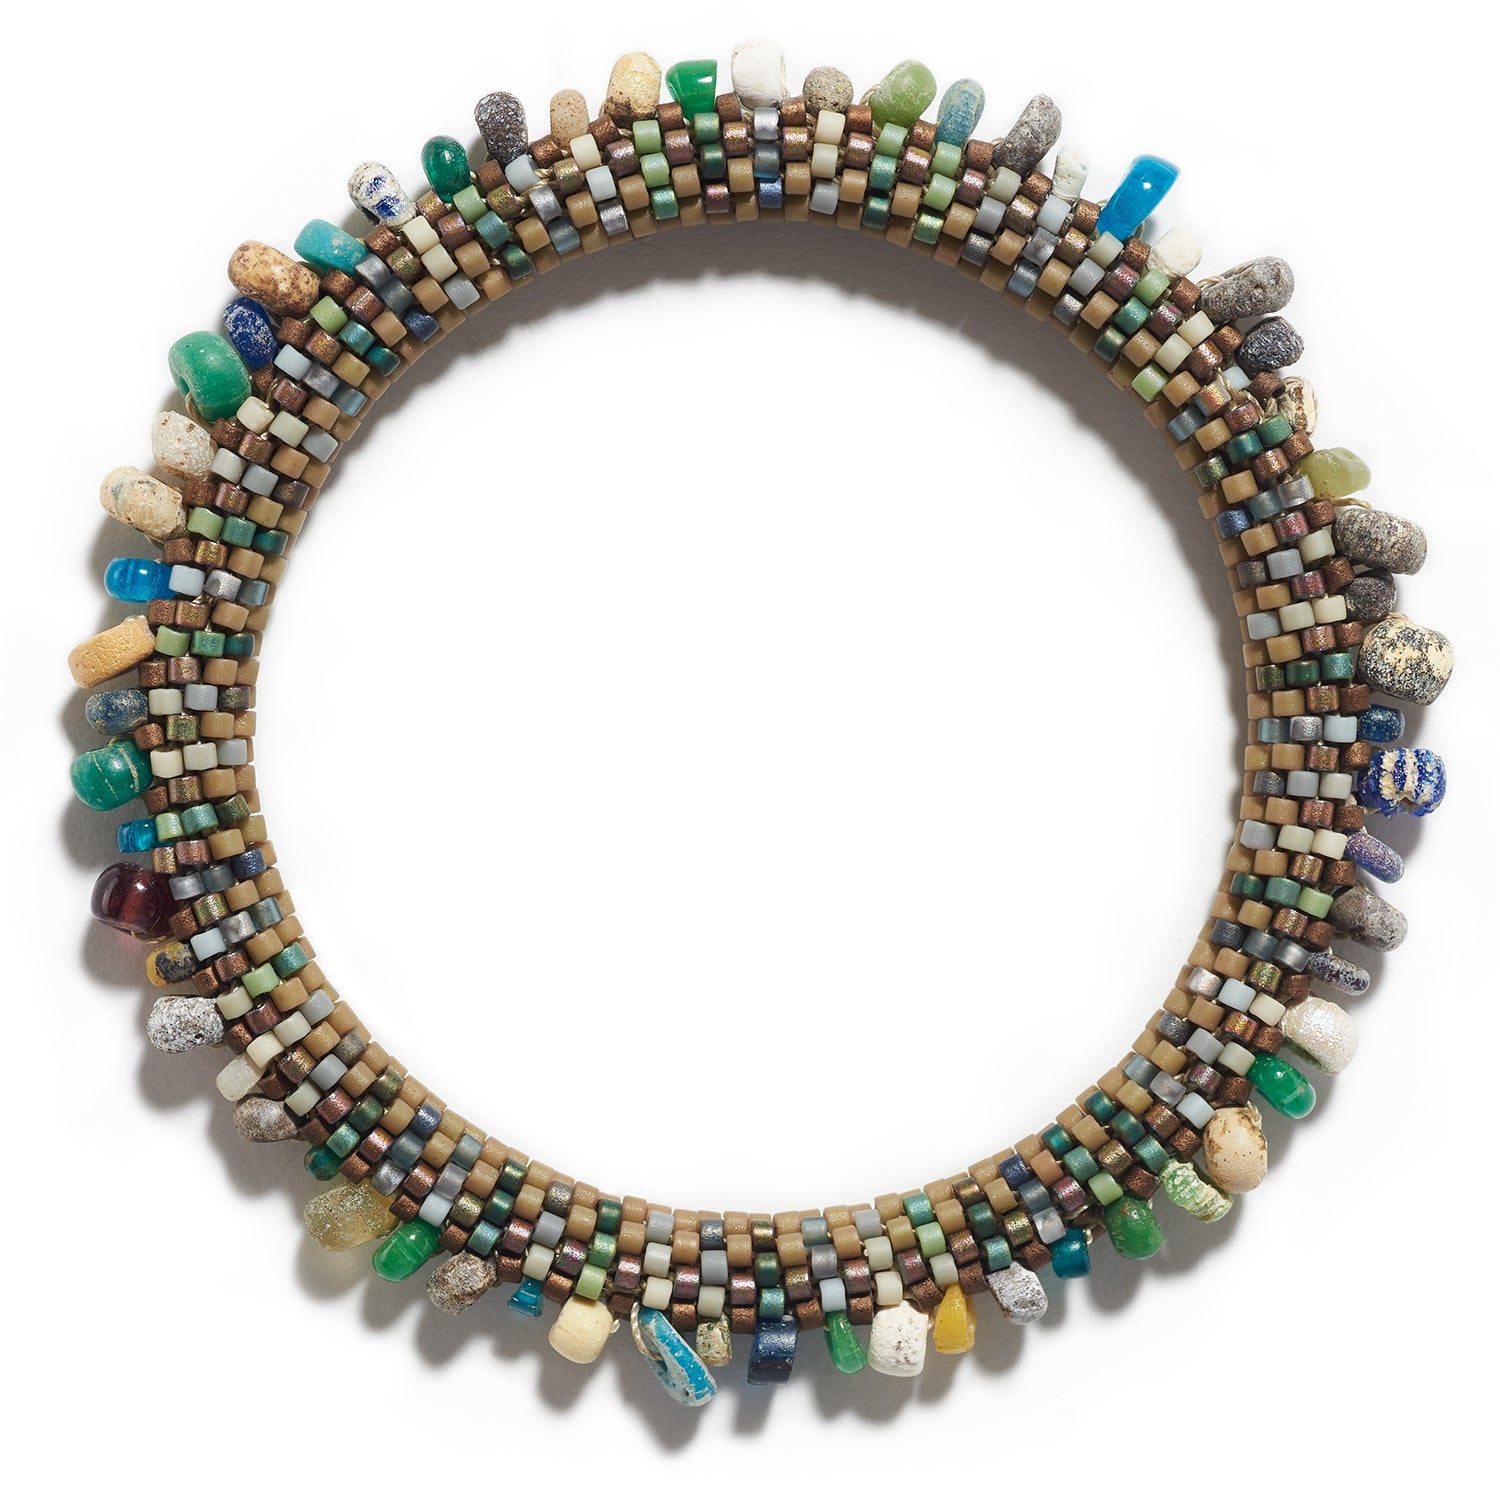 Medieval Beads Bracelet